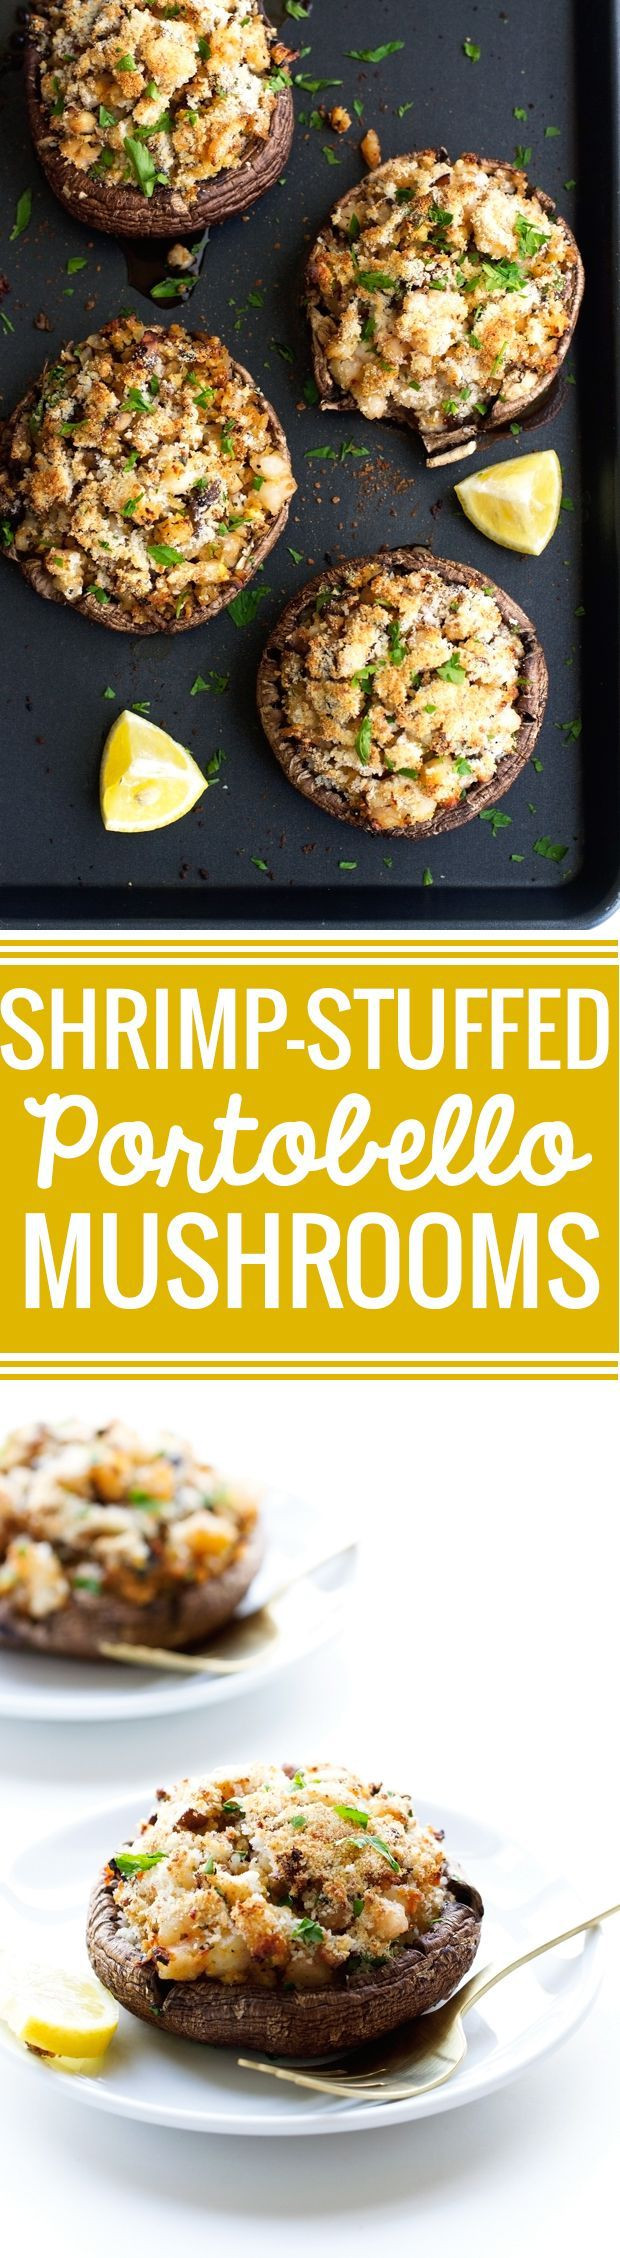 Seafood Stuffed Portobello Mushroom Recipes
 Shrimp Stuffed Portobello Mushrooms